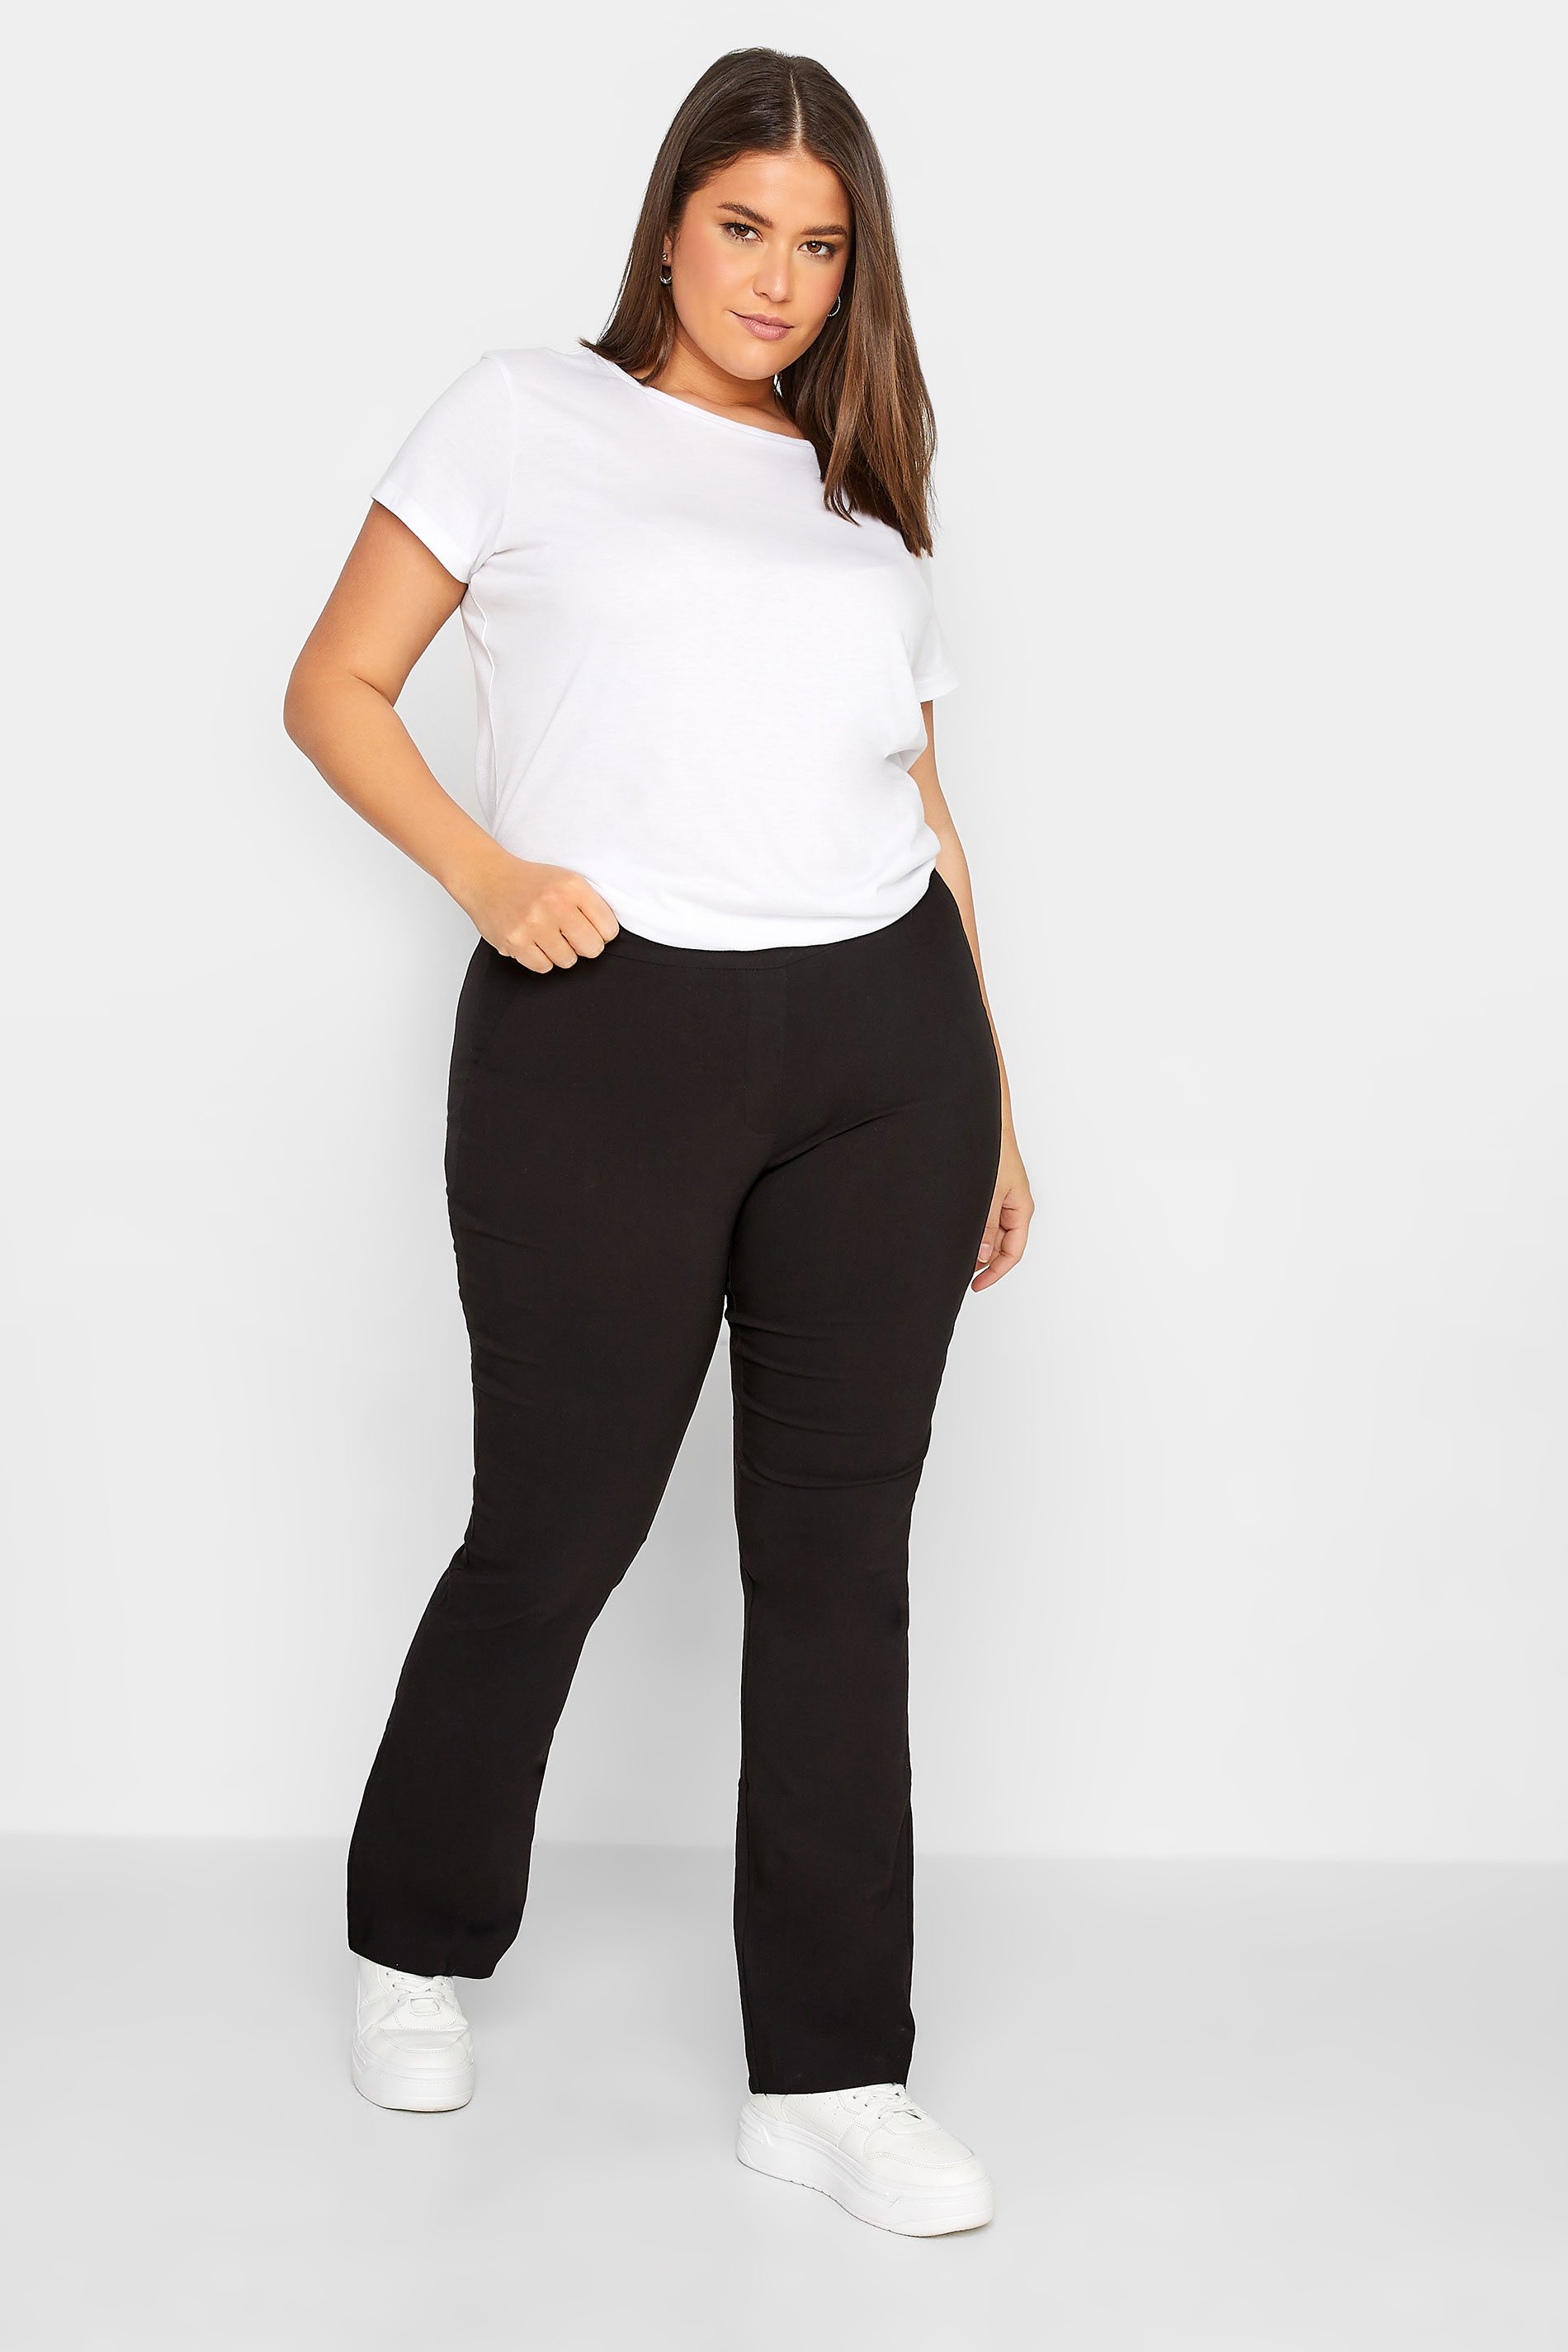 LTS Tall Women's Black Bootcut Trousers | Long Tall Sally 1